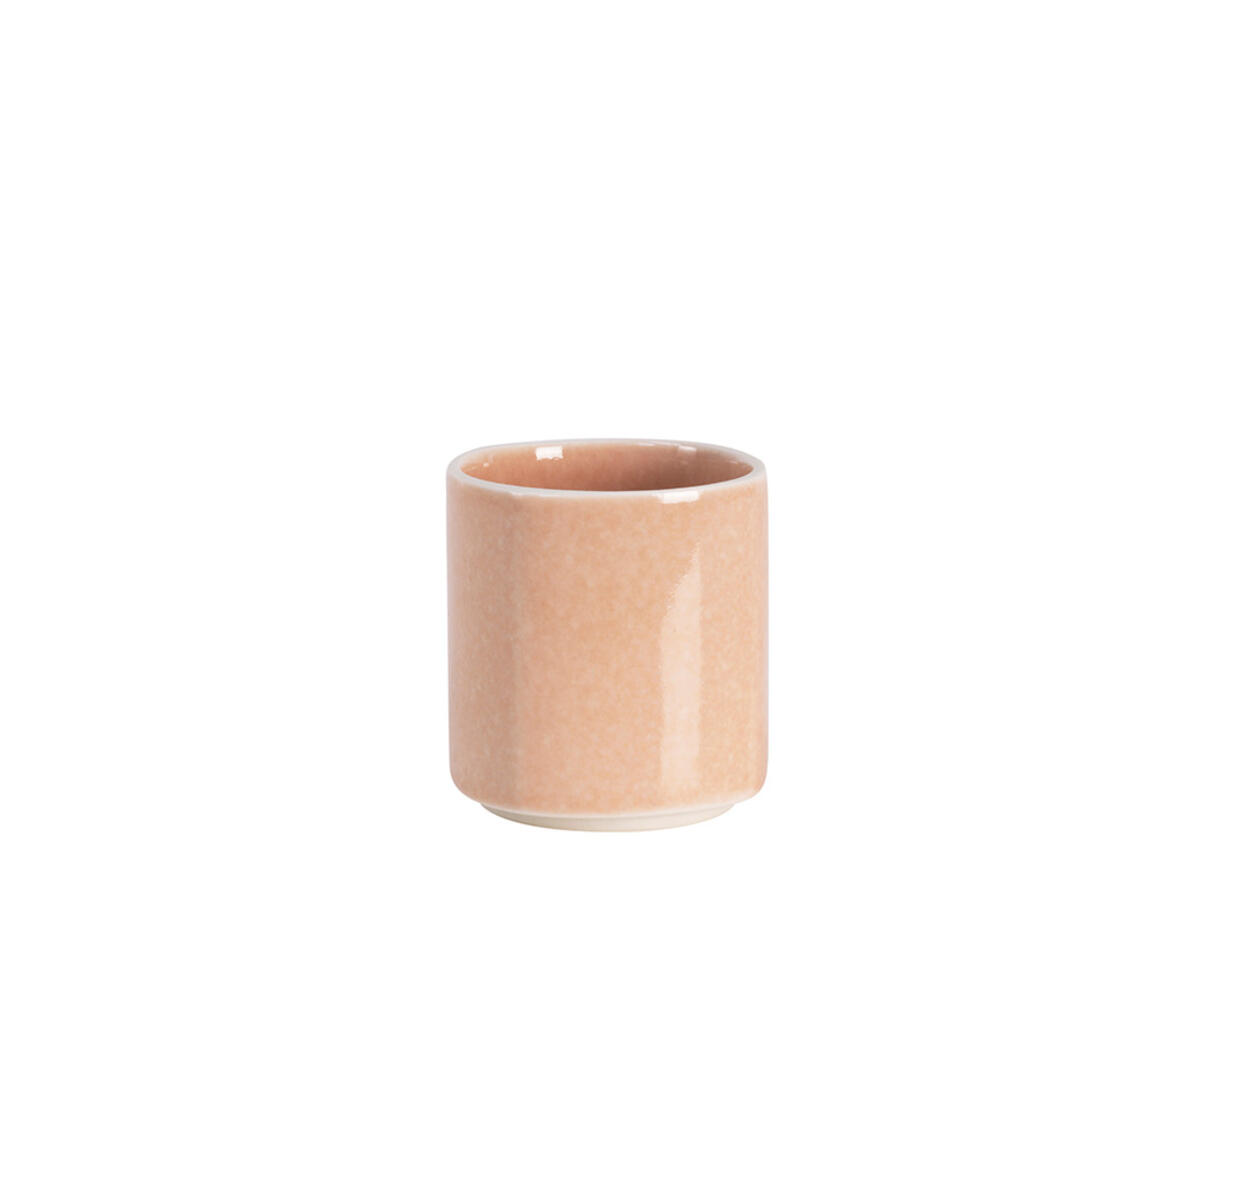 m tumbler studio 2.0 blush.celadon ceramic manufacturer